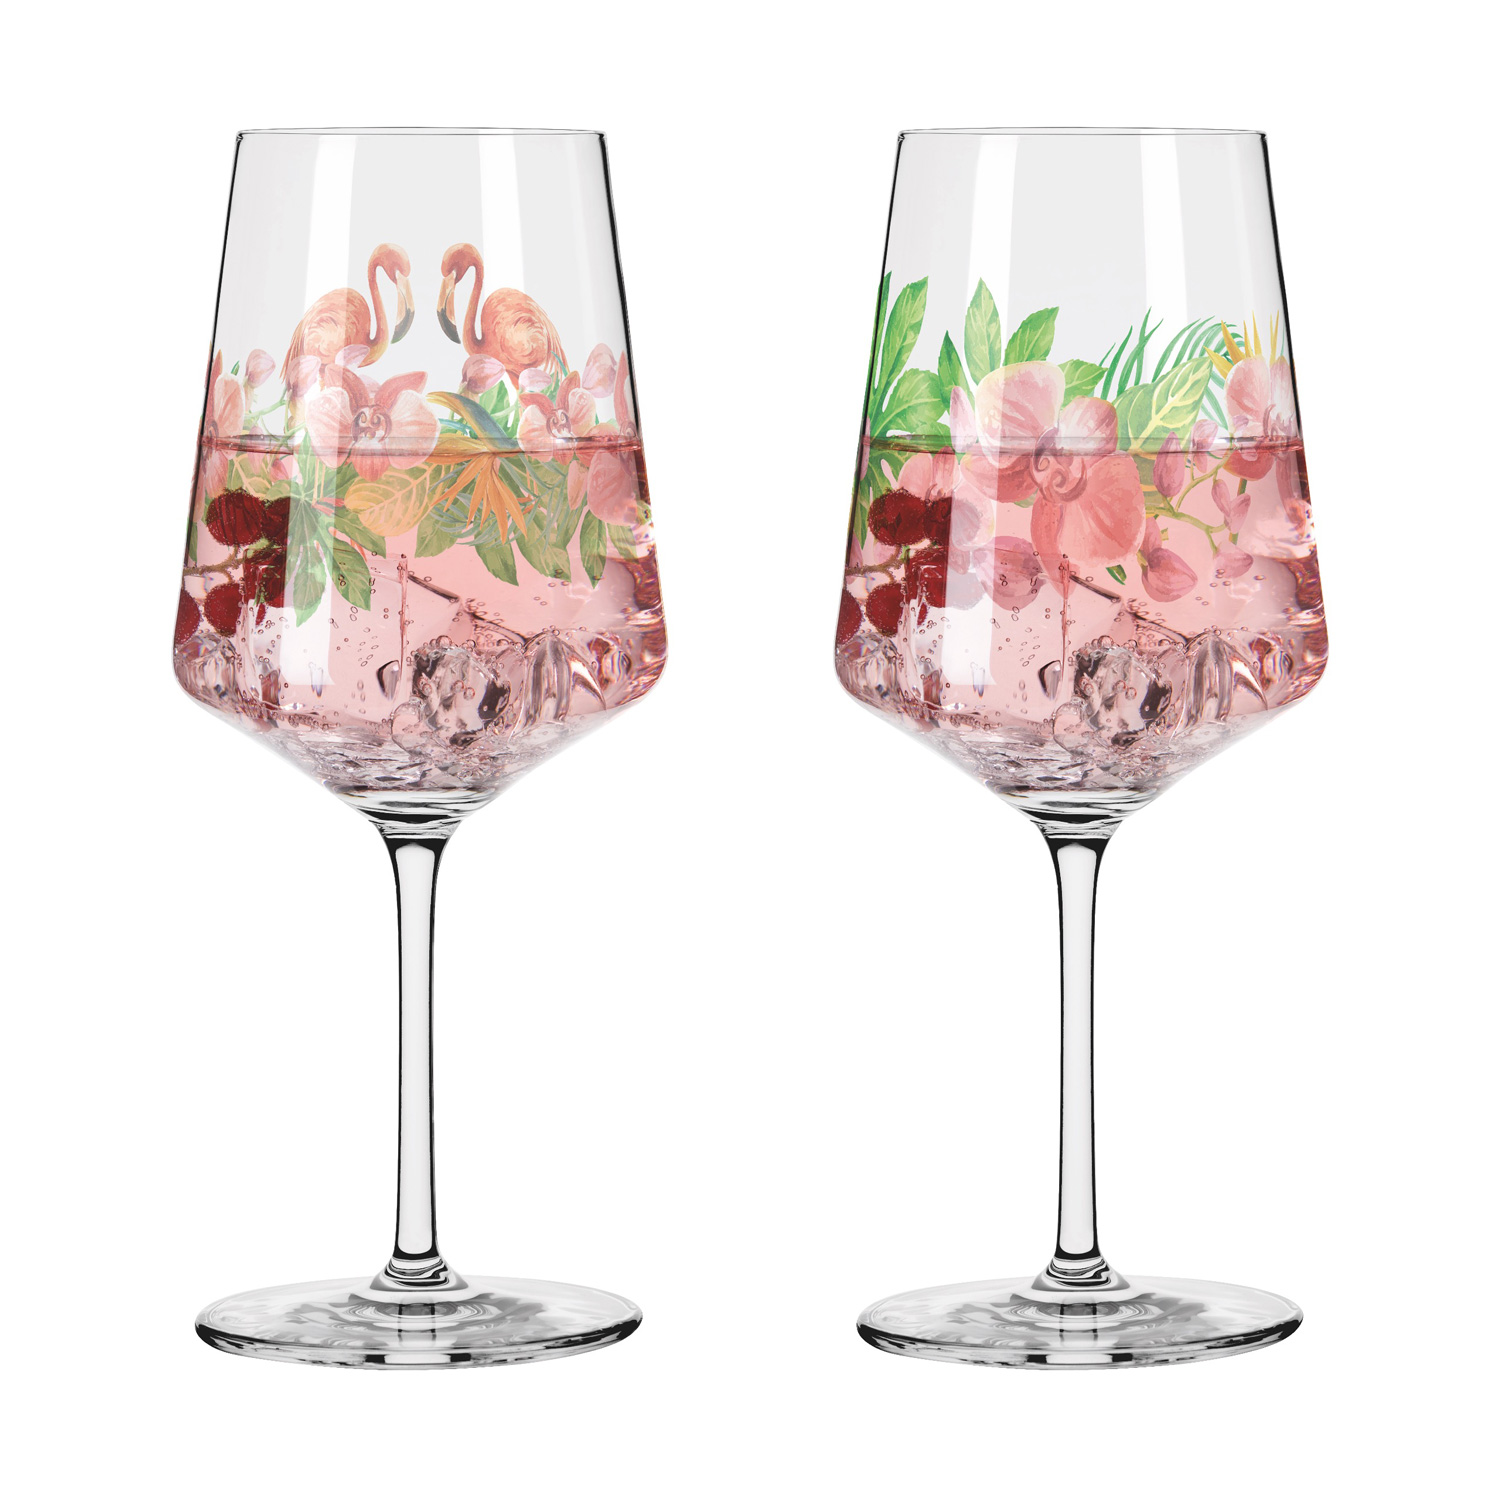 Sommersonett Wine Glass 2-pack, NO: 5 - Ritzenhoff @ RoyalDesign